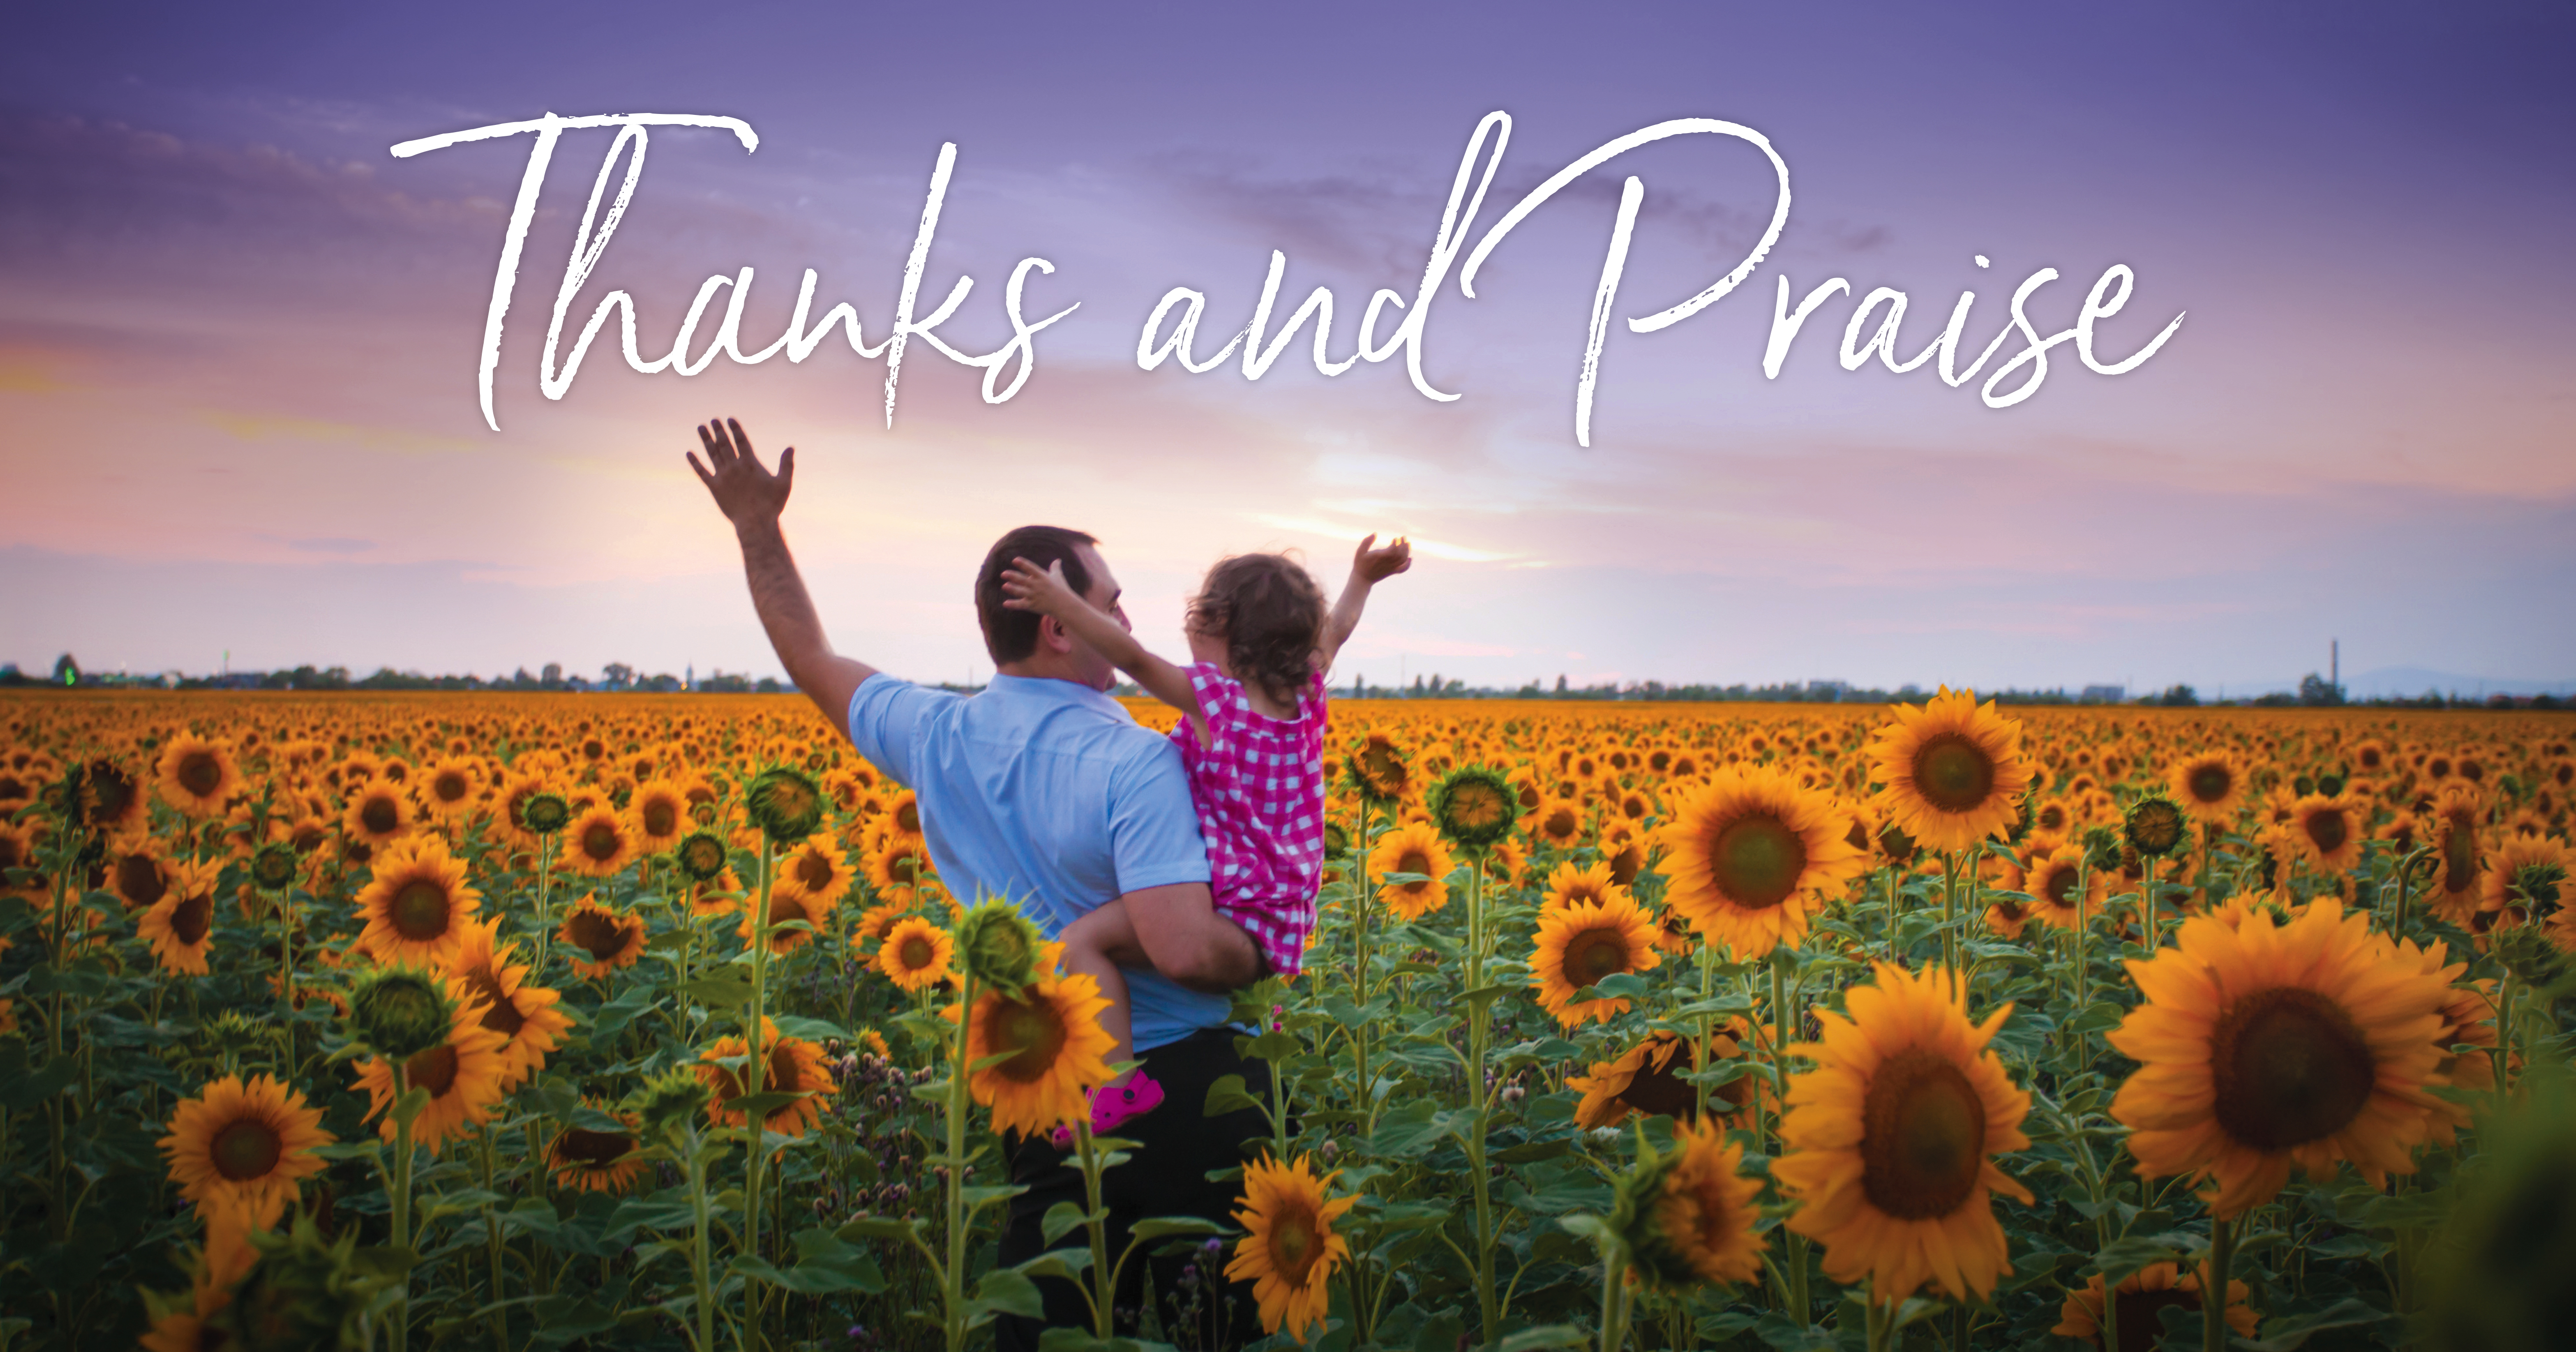 Praise God with Thankfulness